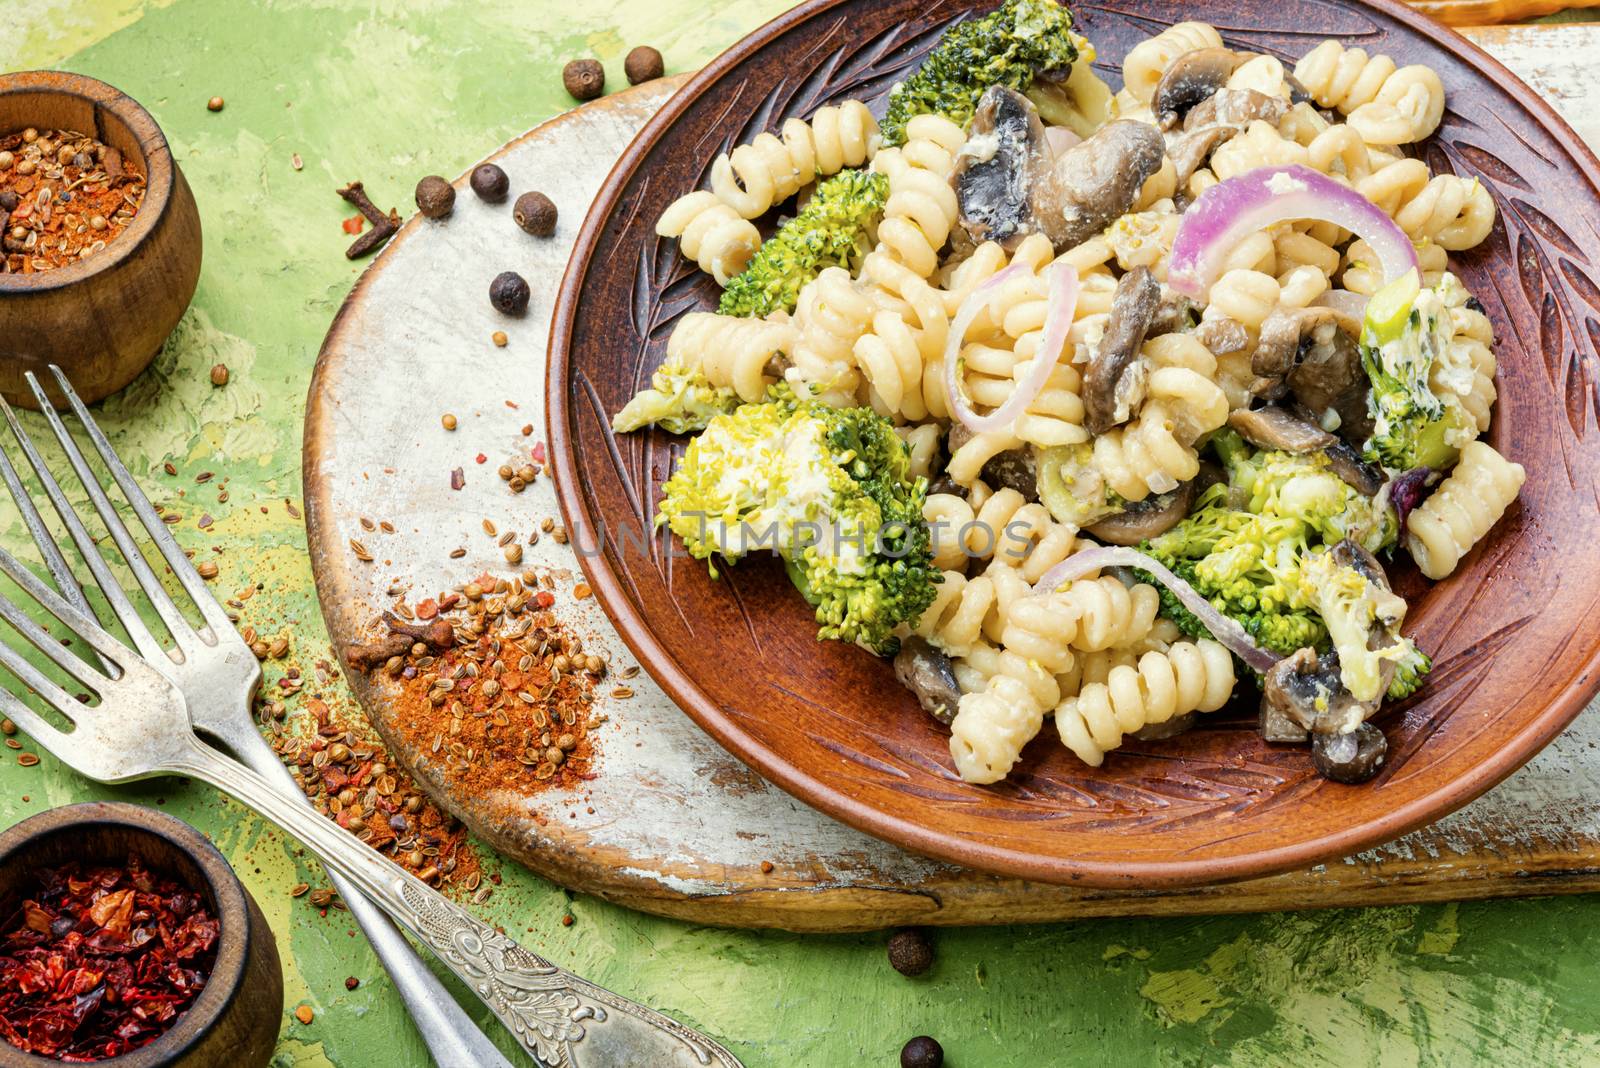 Plate of iItalian pasta with broccoli.Italian food